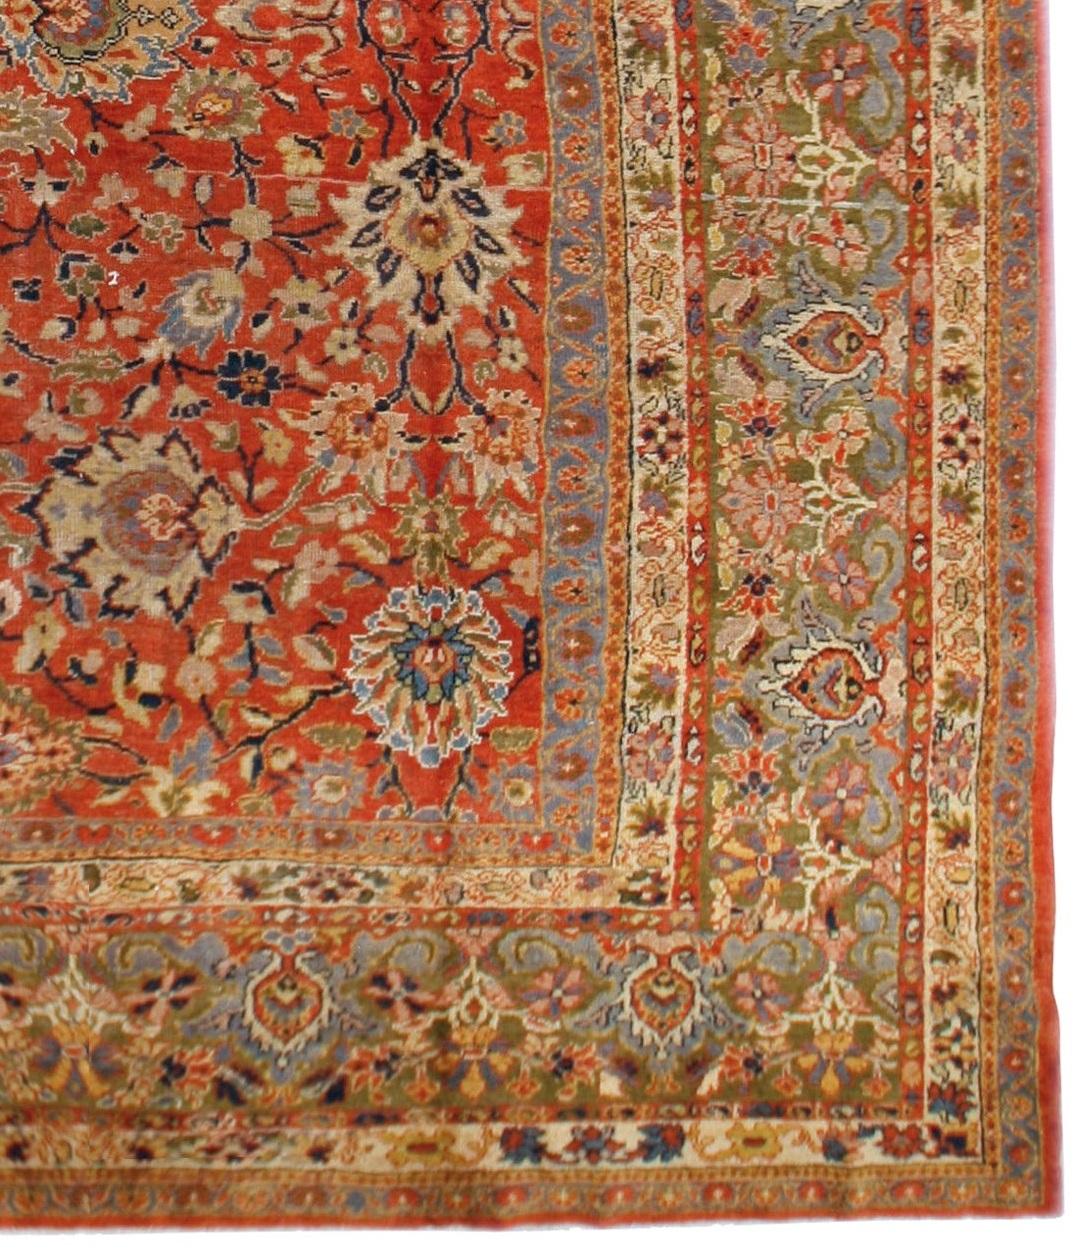 20th Century Antique Persian Ziegler Rug, circa 1900, 9'2 x 13'5 For Sale